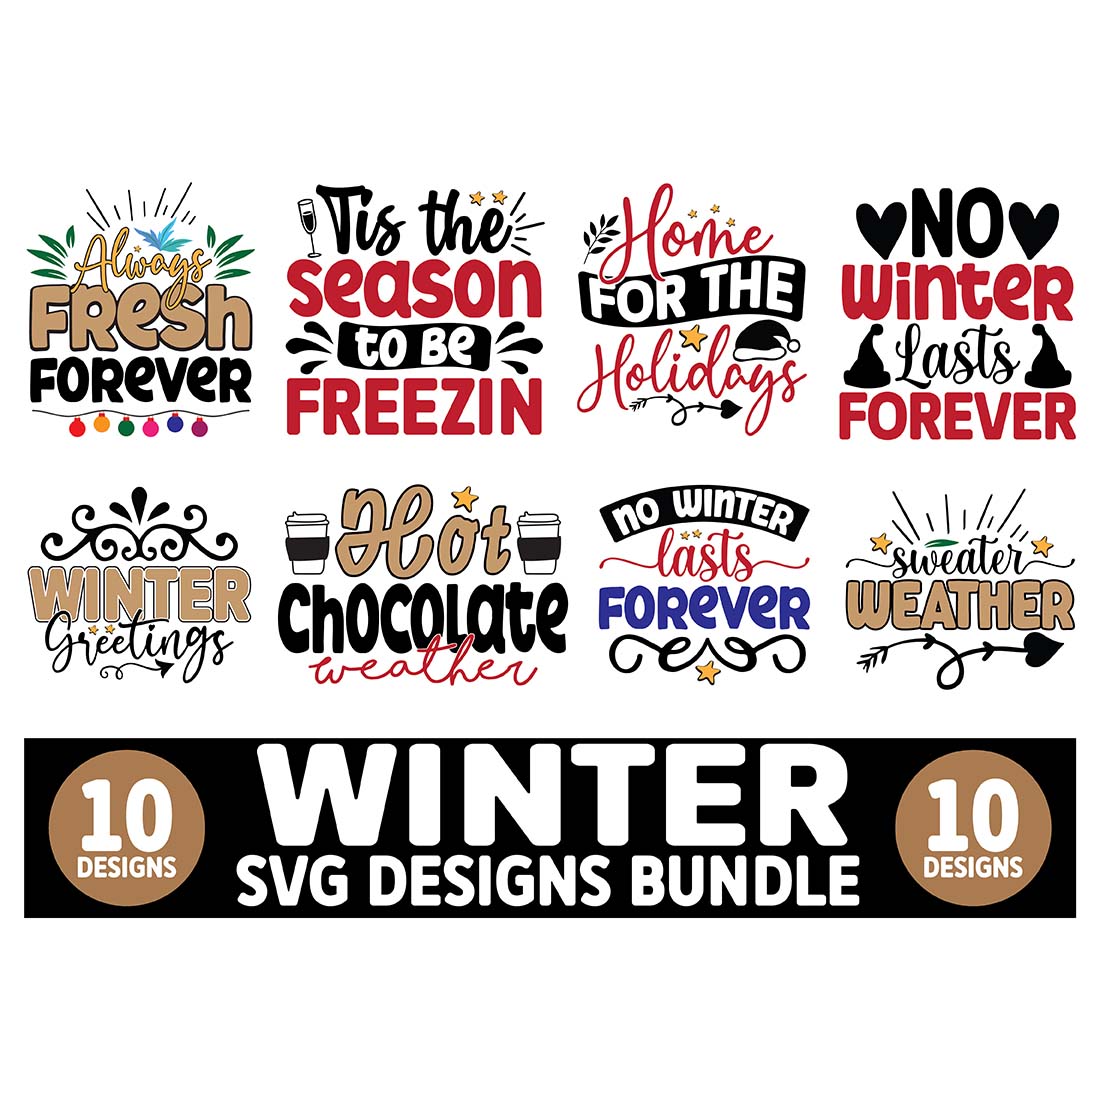 10 Winter SVG Designs Bundle main cover